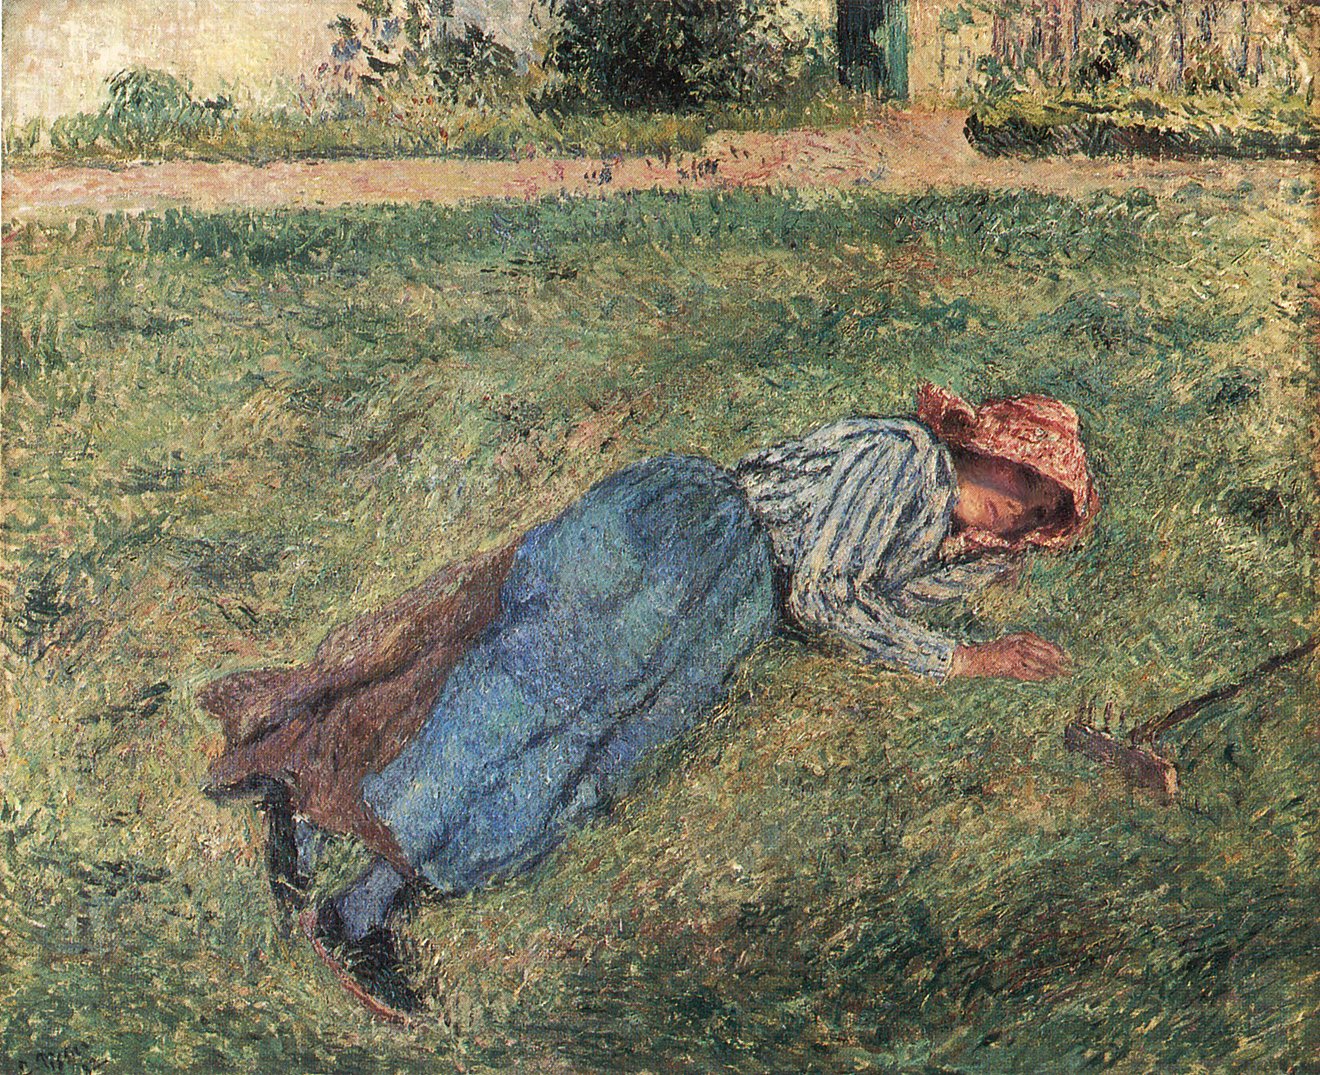 Camille+Pissarro-1830-1903 (301).jpg